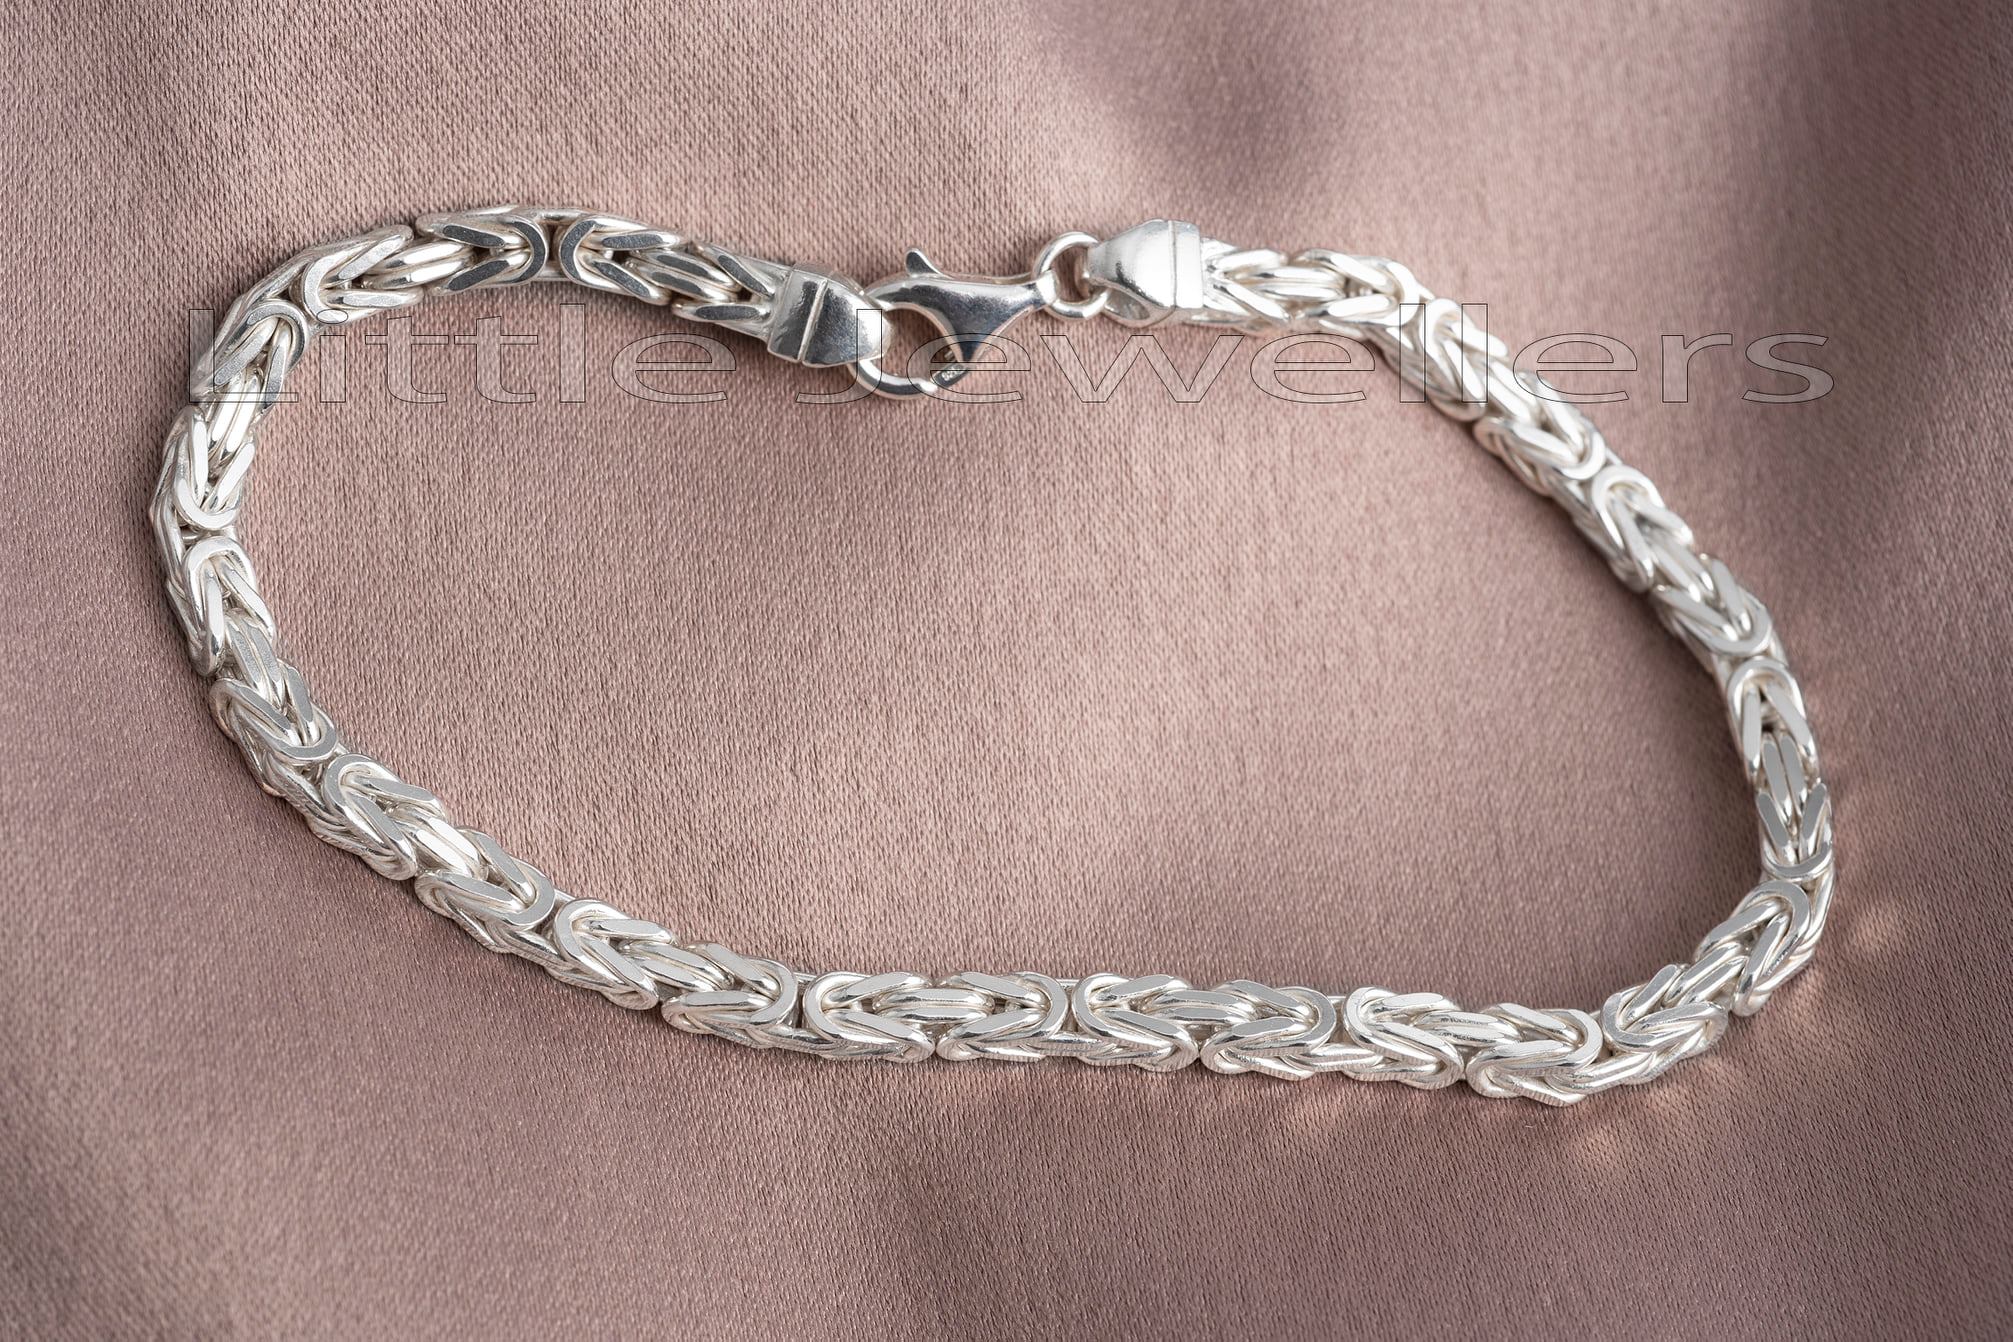 Buy quality Silver Italian bracelet in Patan